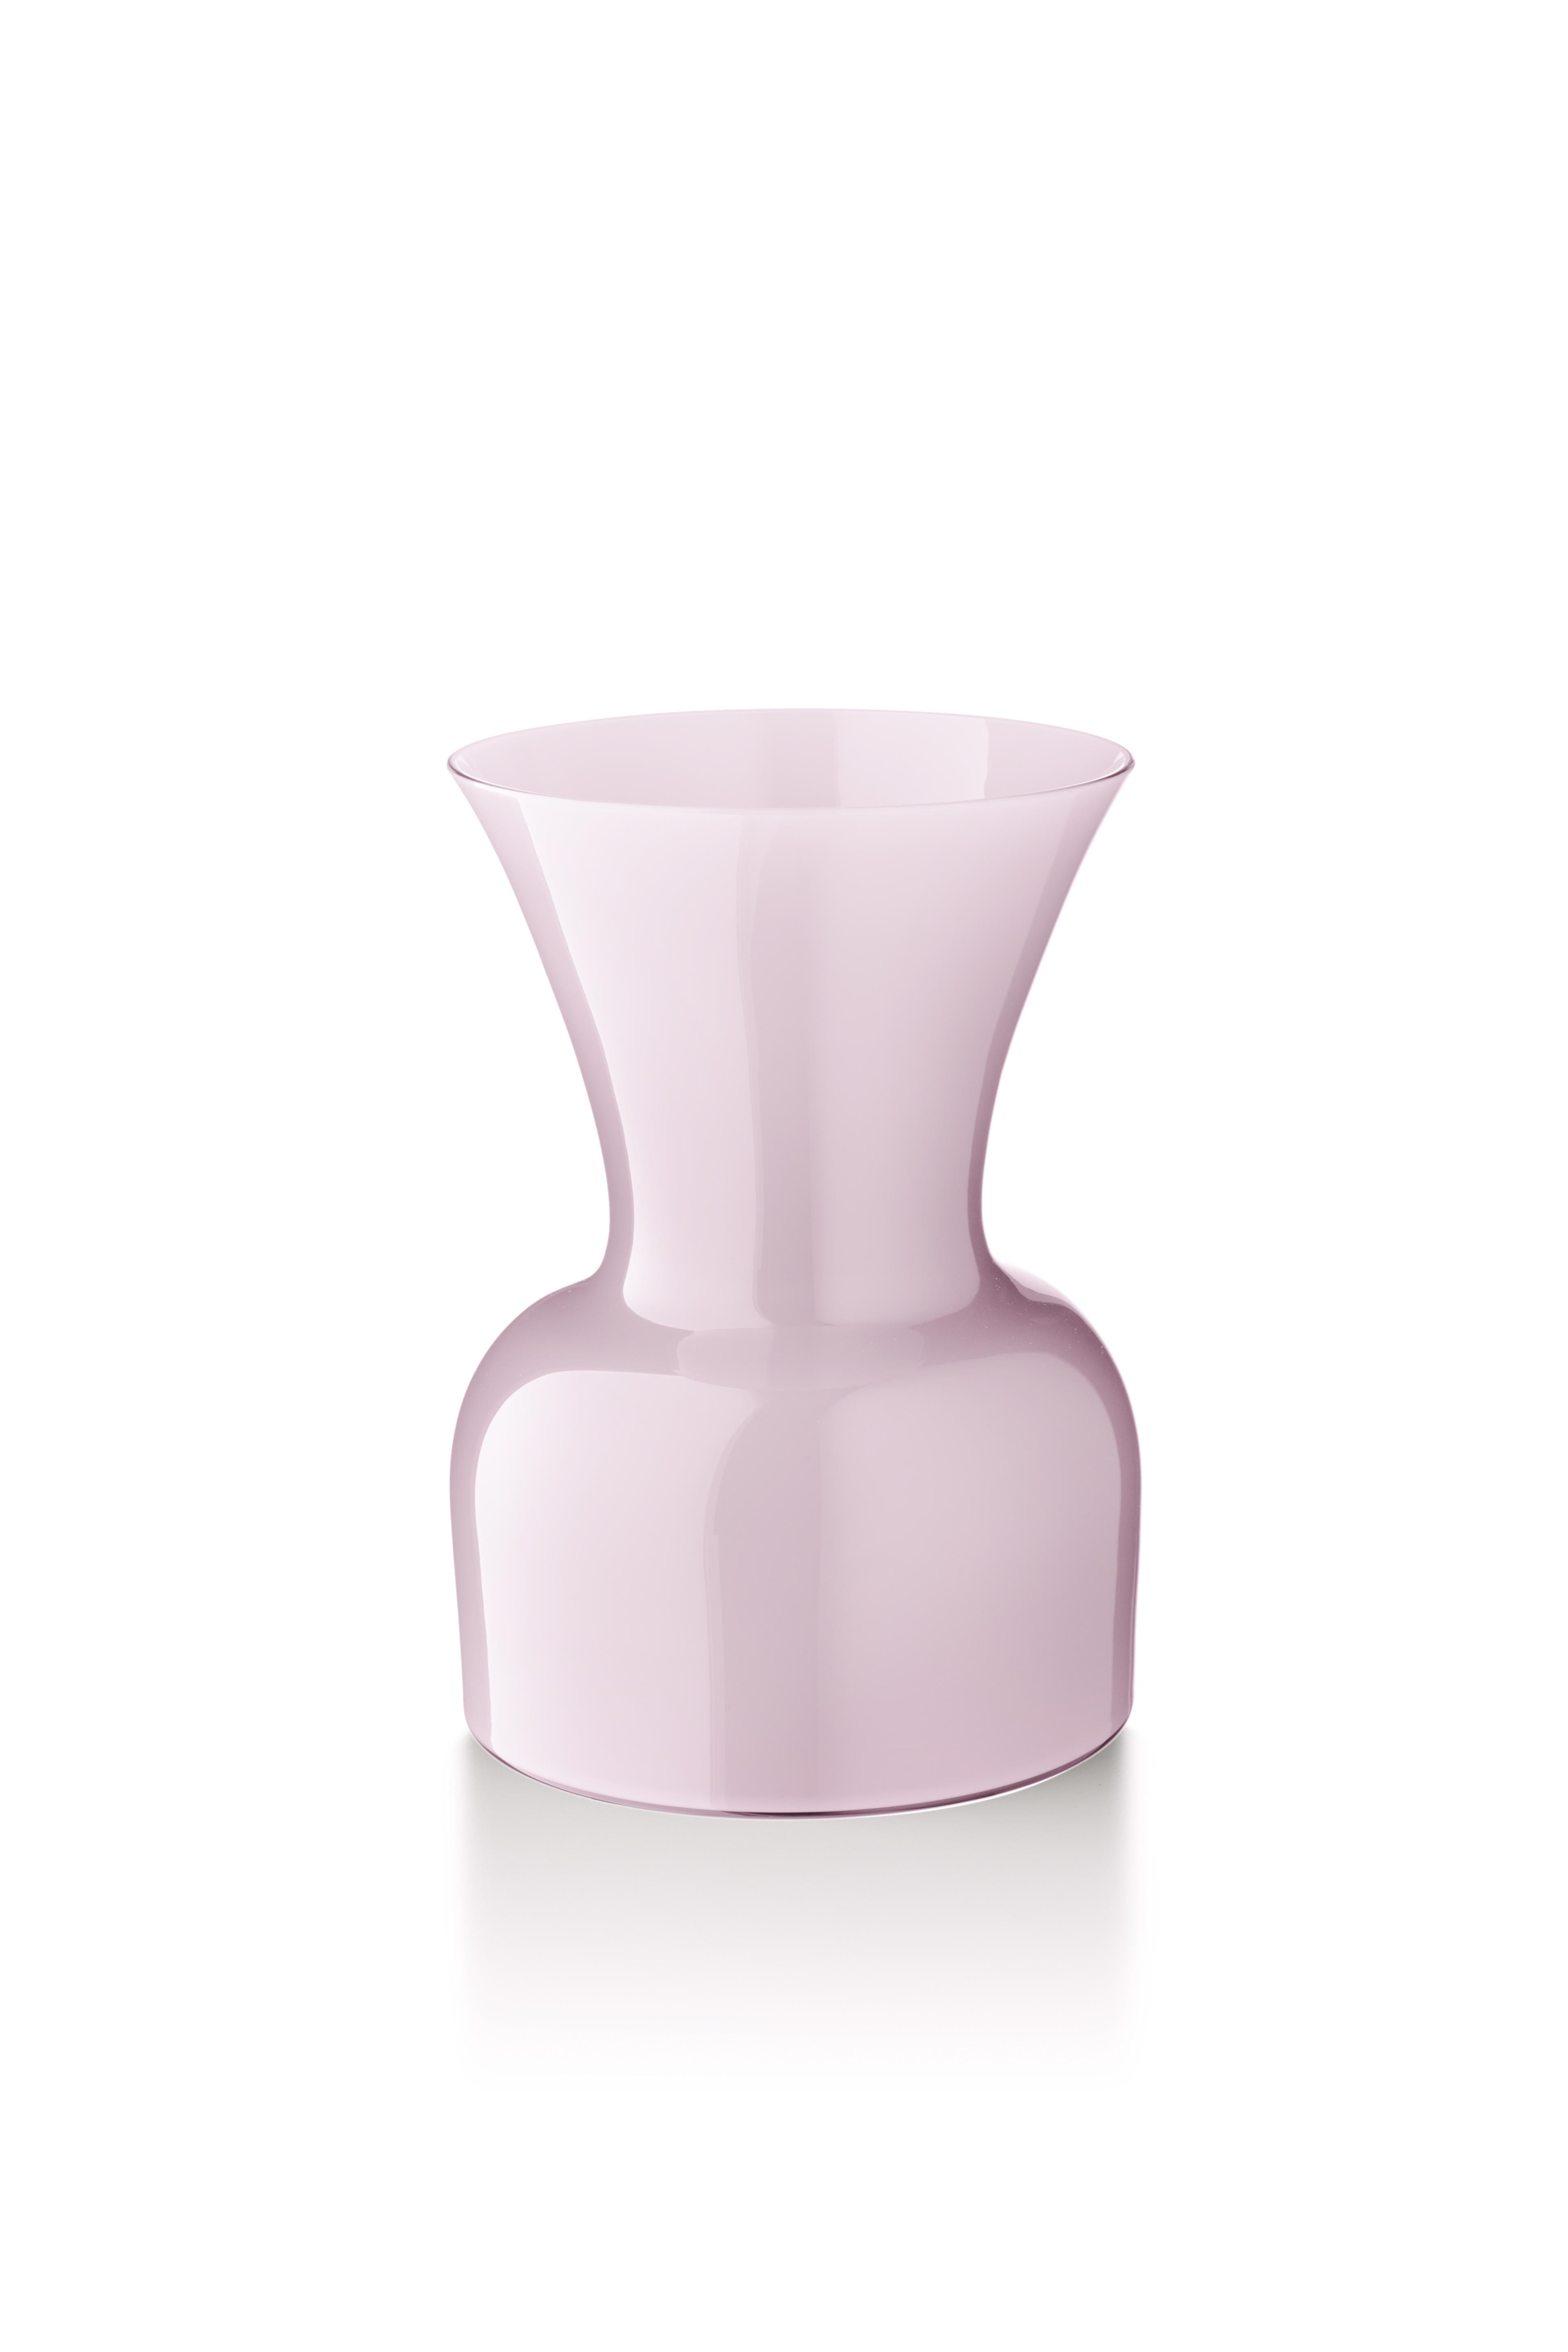 Pink (10055) Medium Profili Daisy Murano Glass Vase by Anna Gili